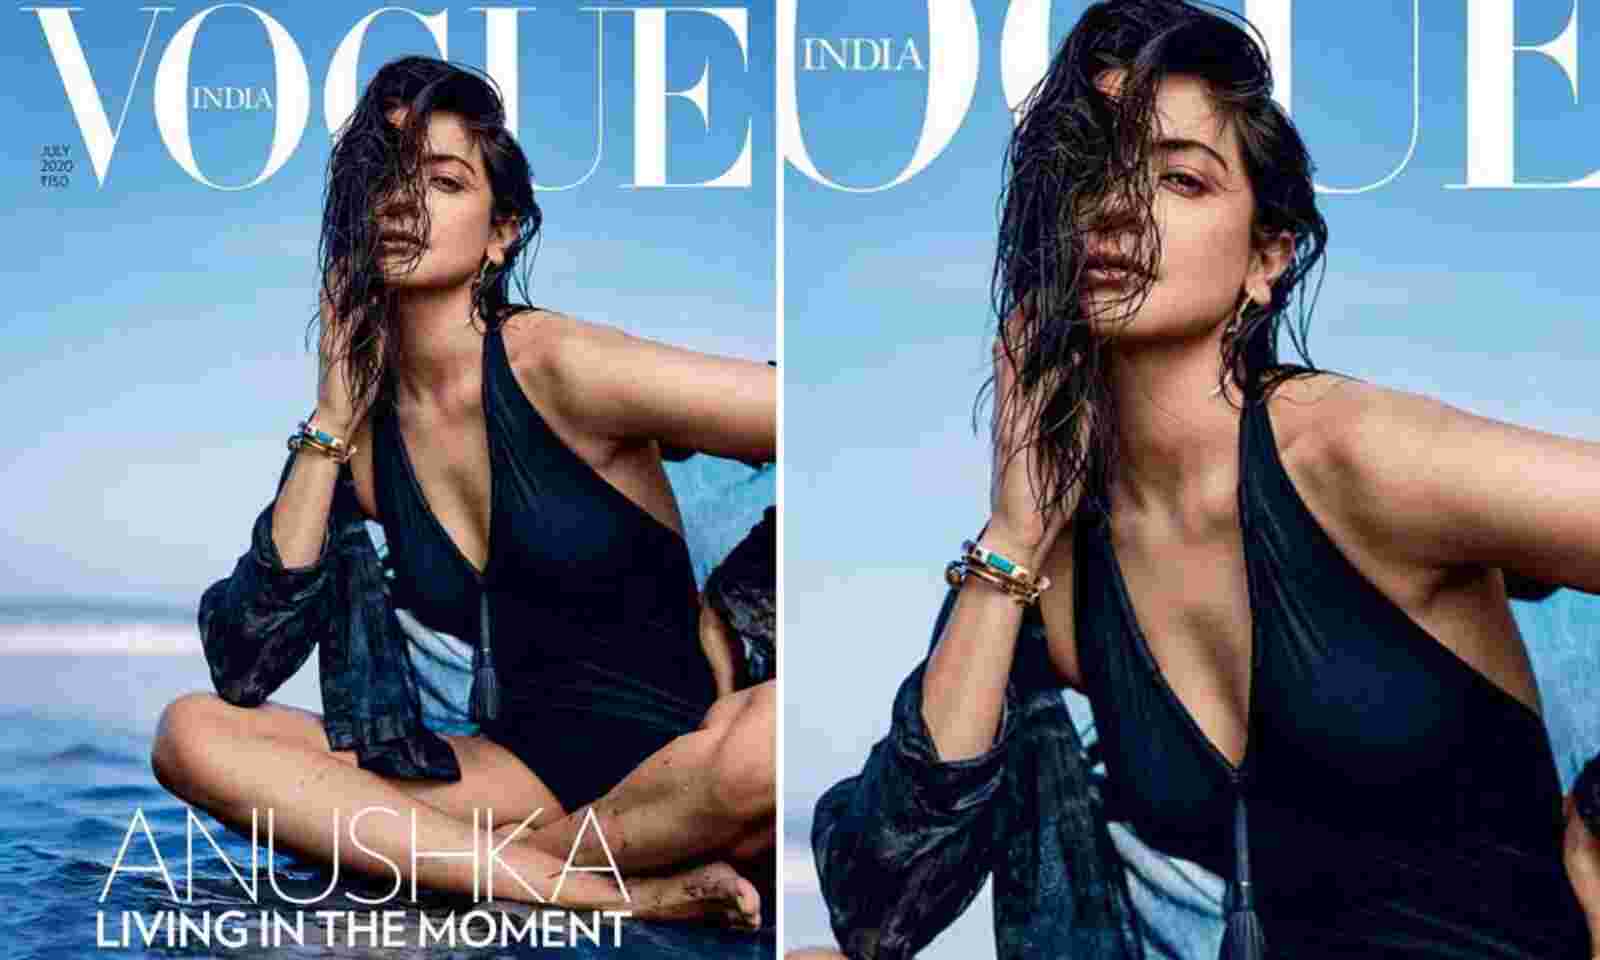 Anushka Sharma Xx Sexy Video - Anushka Sharma Looks Hot On The Cover Page Of Vogue India Magazine